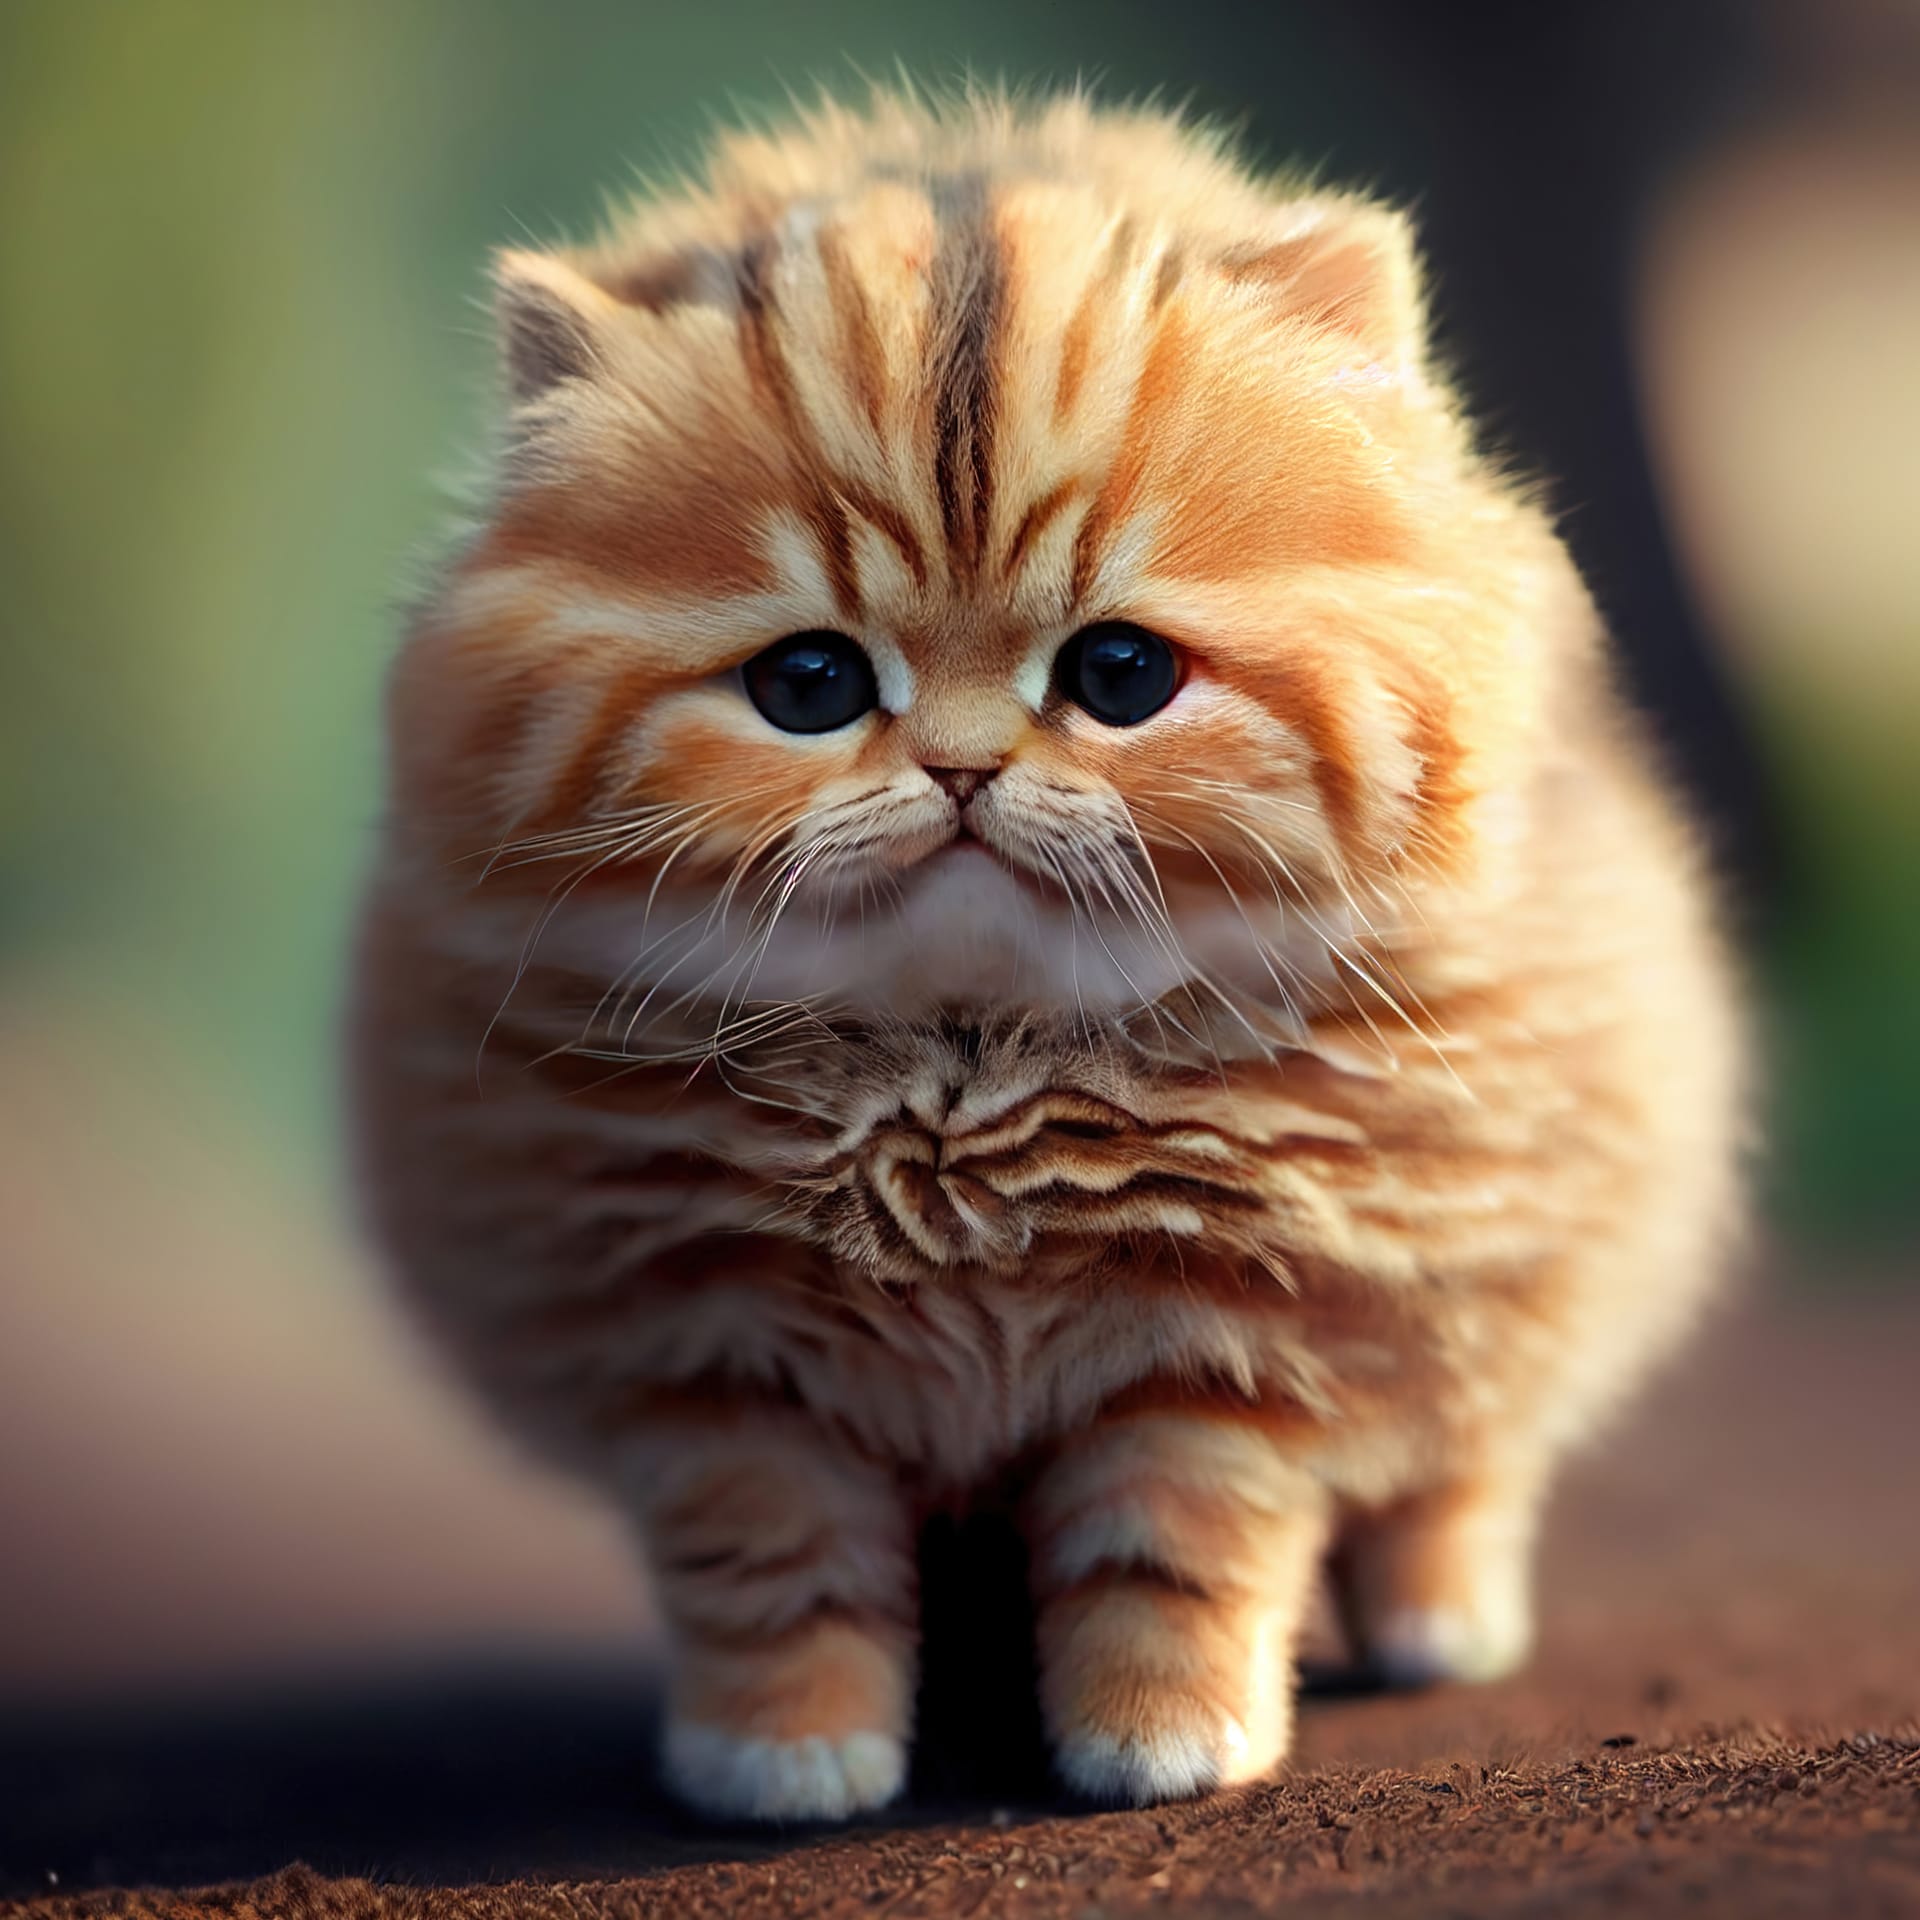 Cat photo little red fat kitten